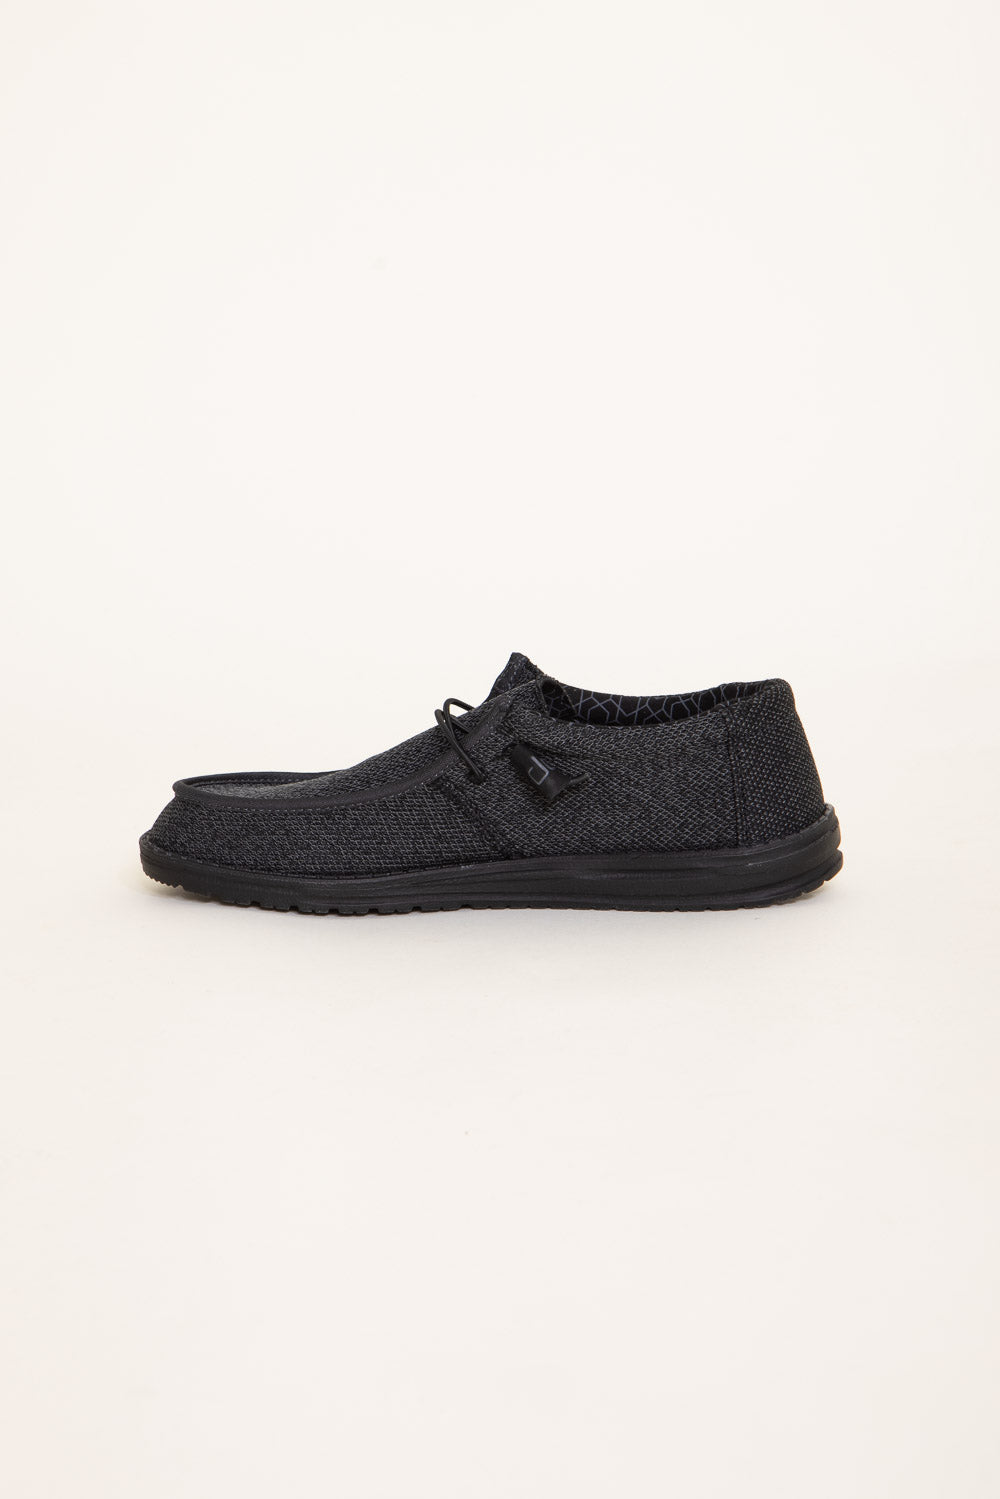 HEYDUDE Men's Wally Sox Micro Shoes in Total Black – Glik's